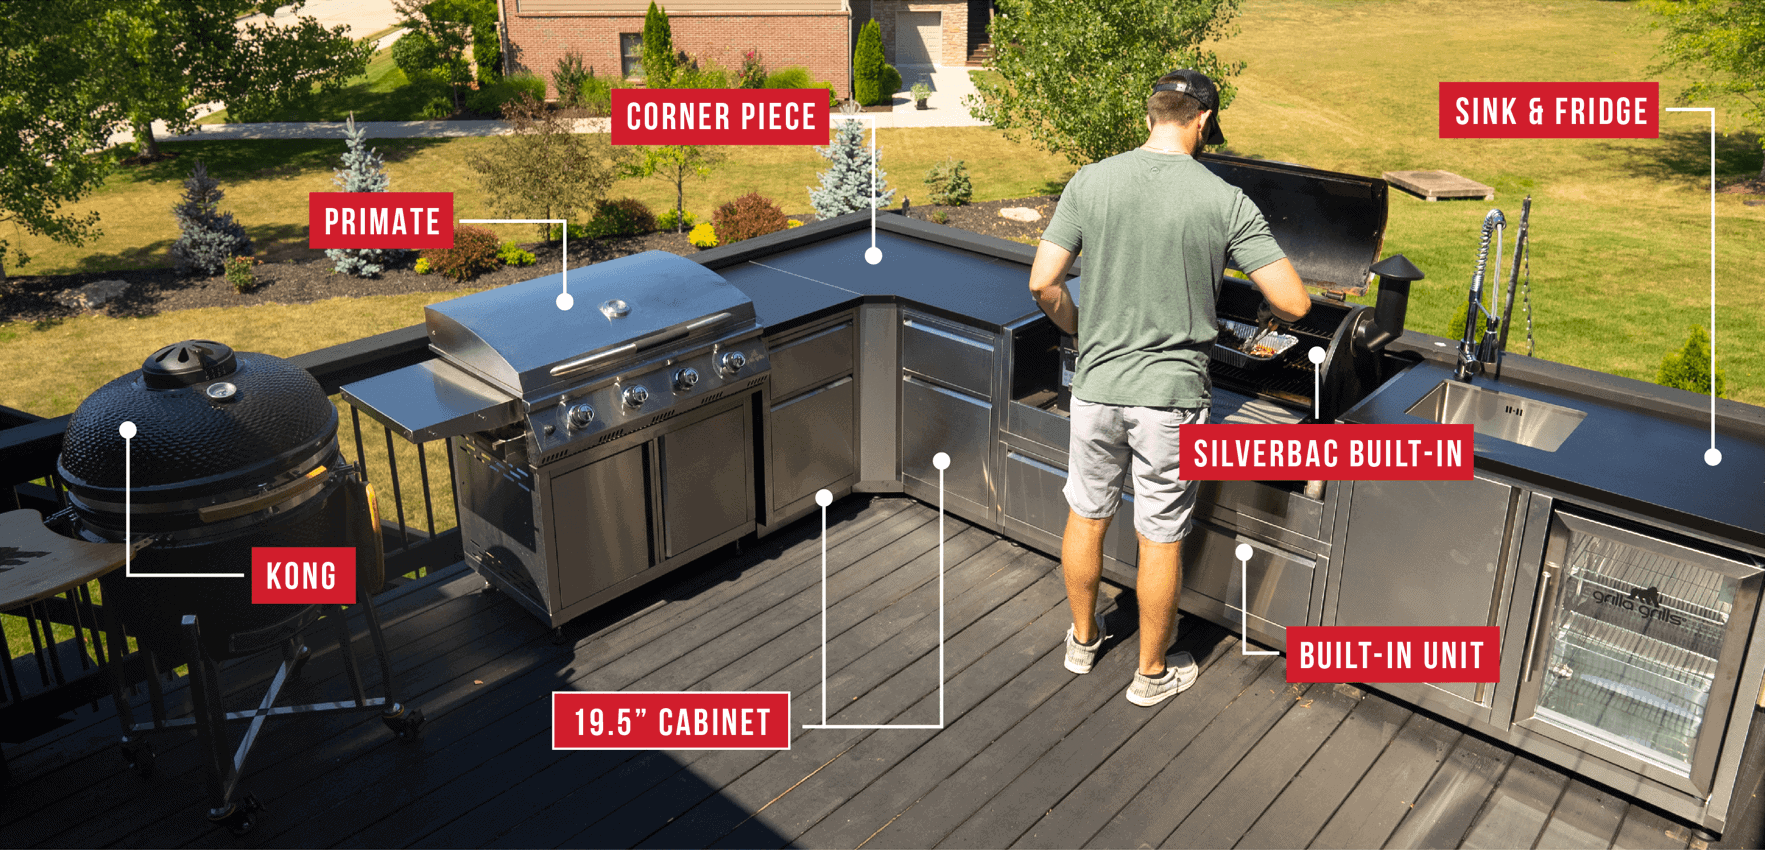 grilla grills evolve your backyard